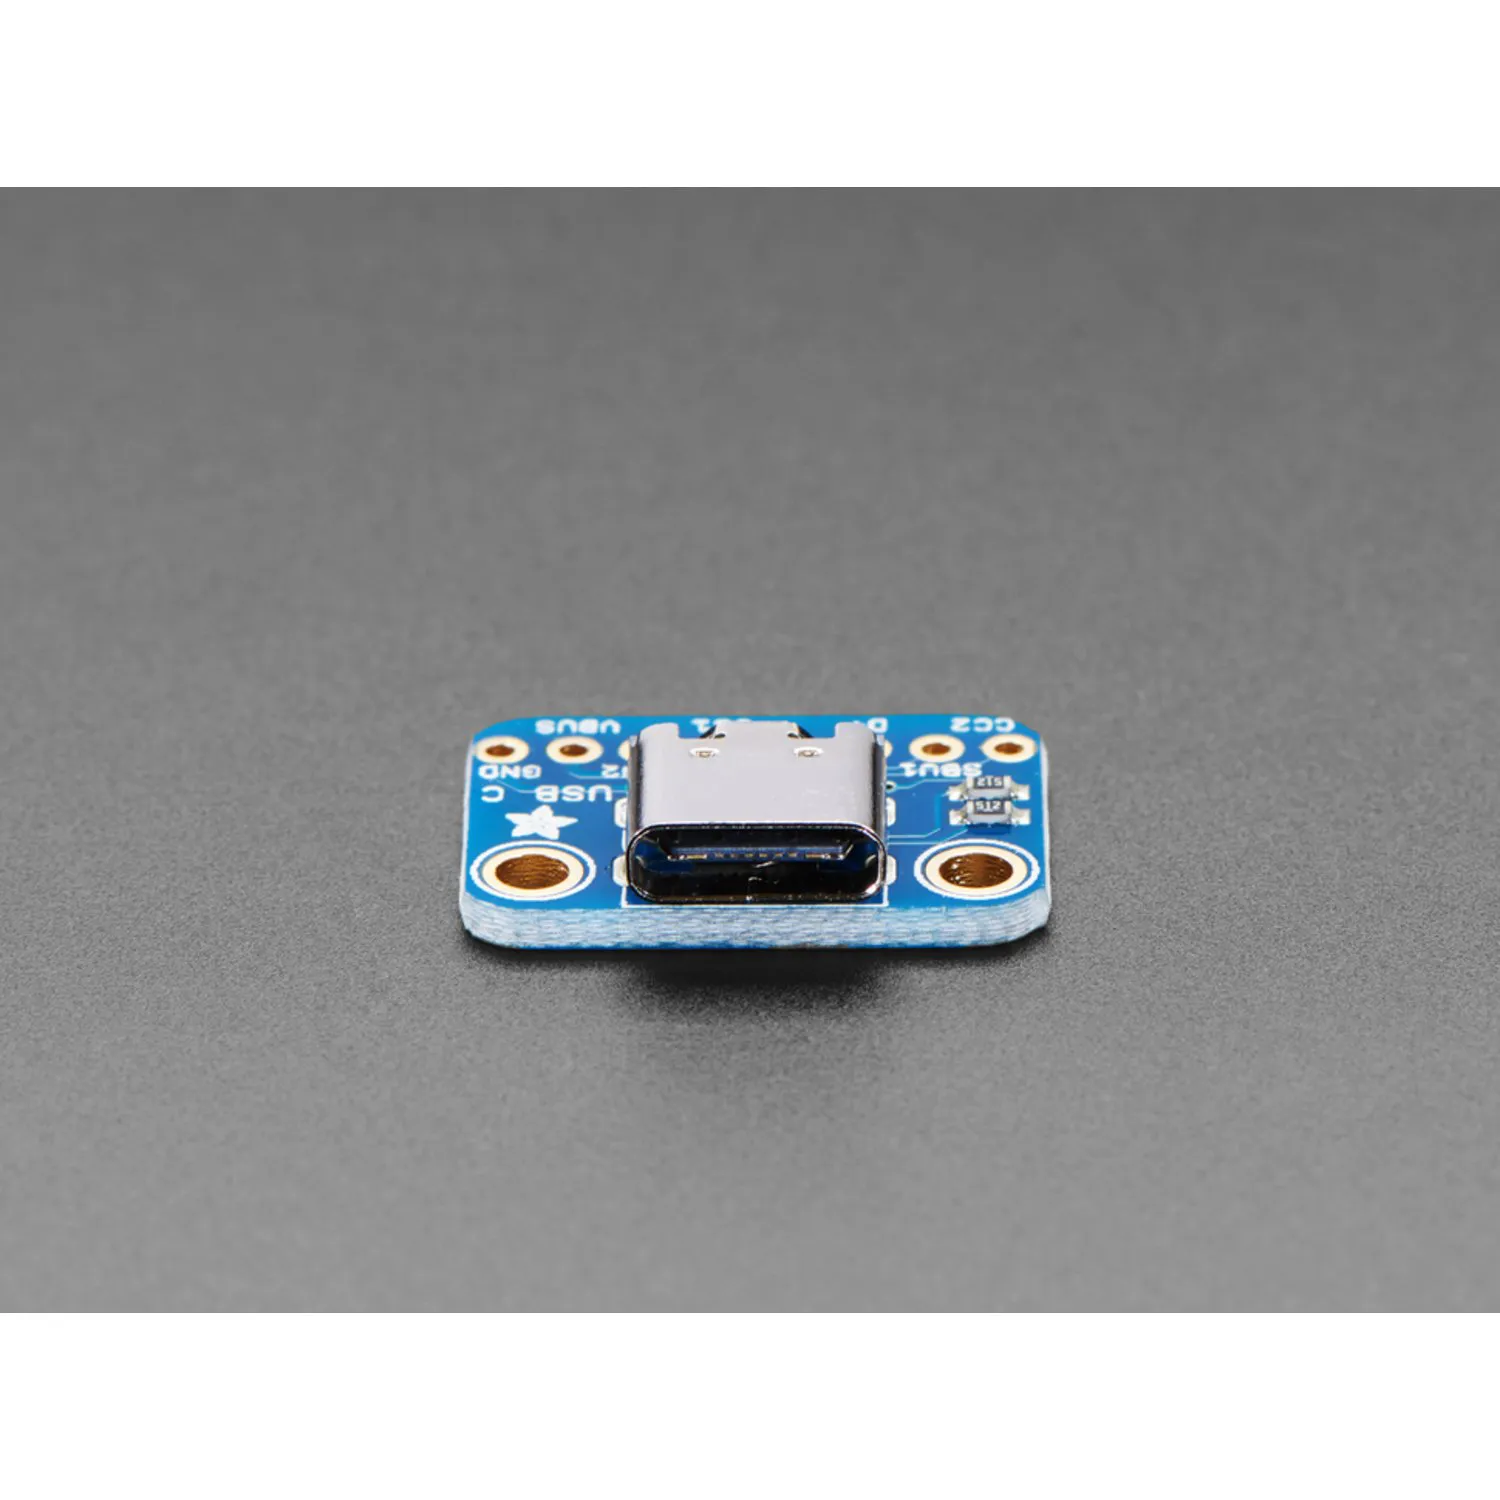 Photo of Adafruit USB C Breakout Board - Downstream Connection